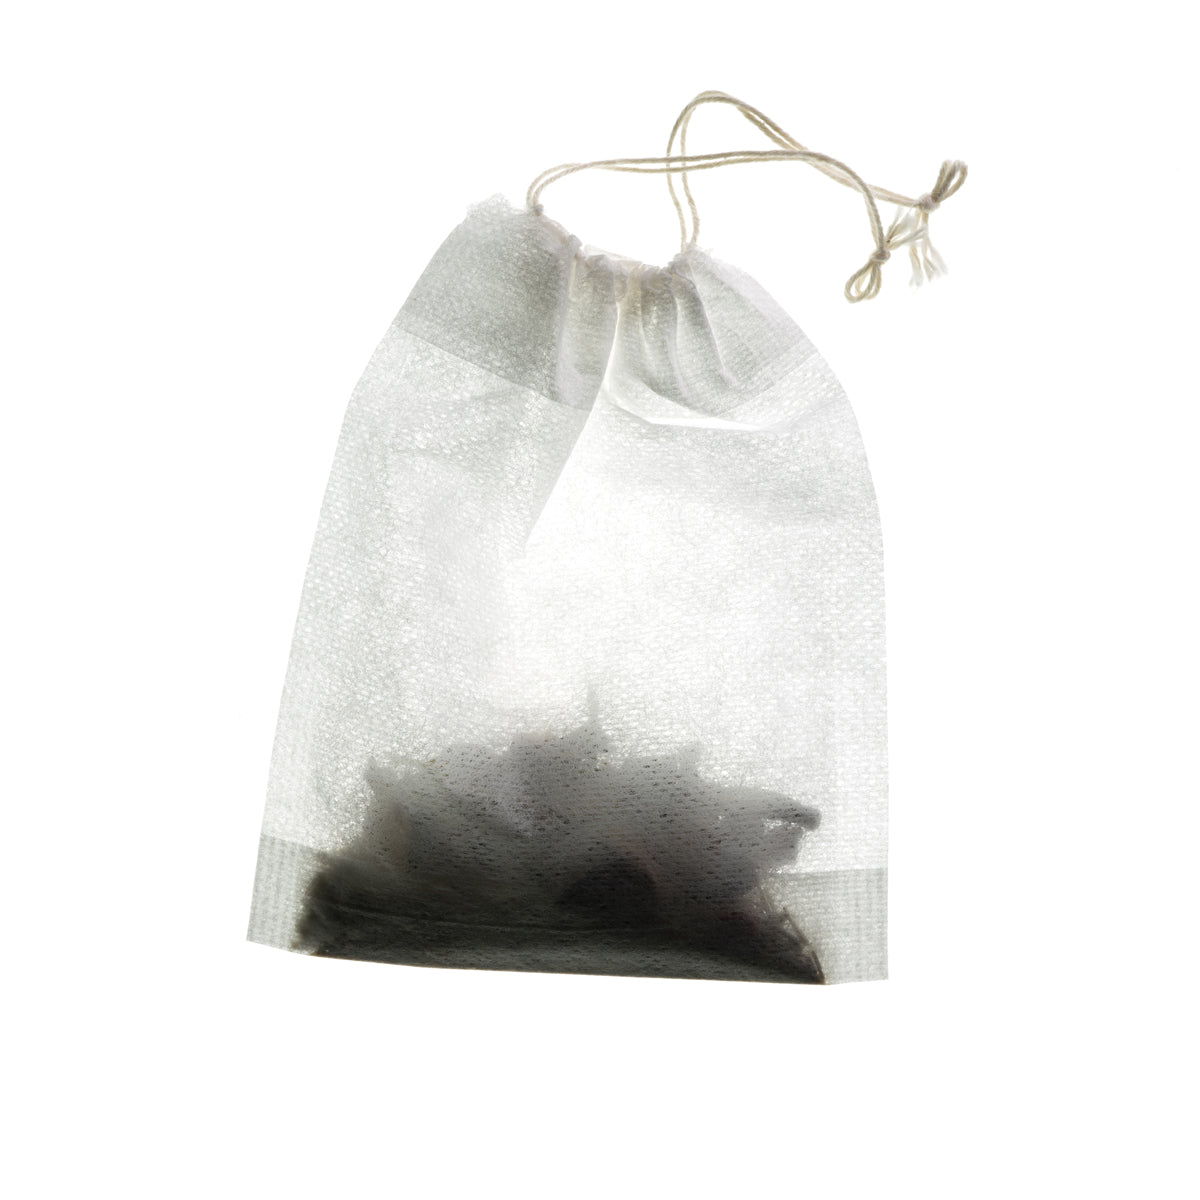 Single tea bag of SHINE 8AM tea by noosha